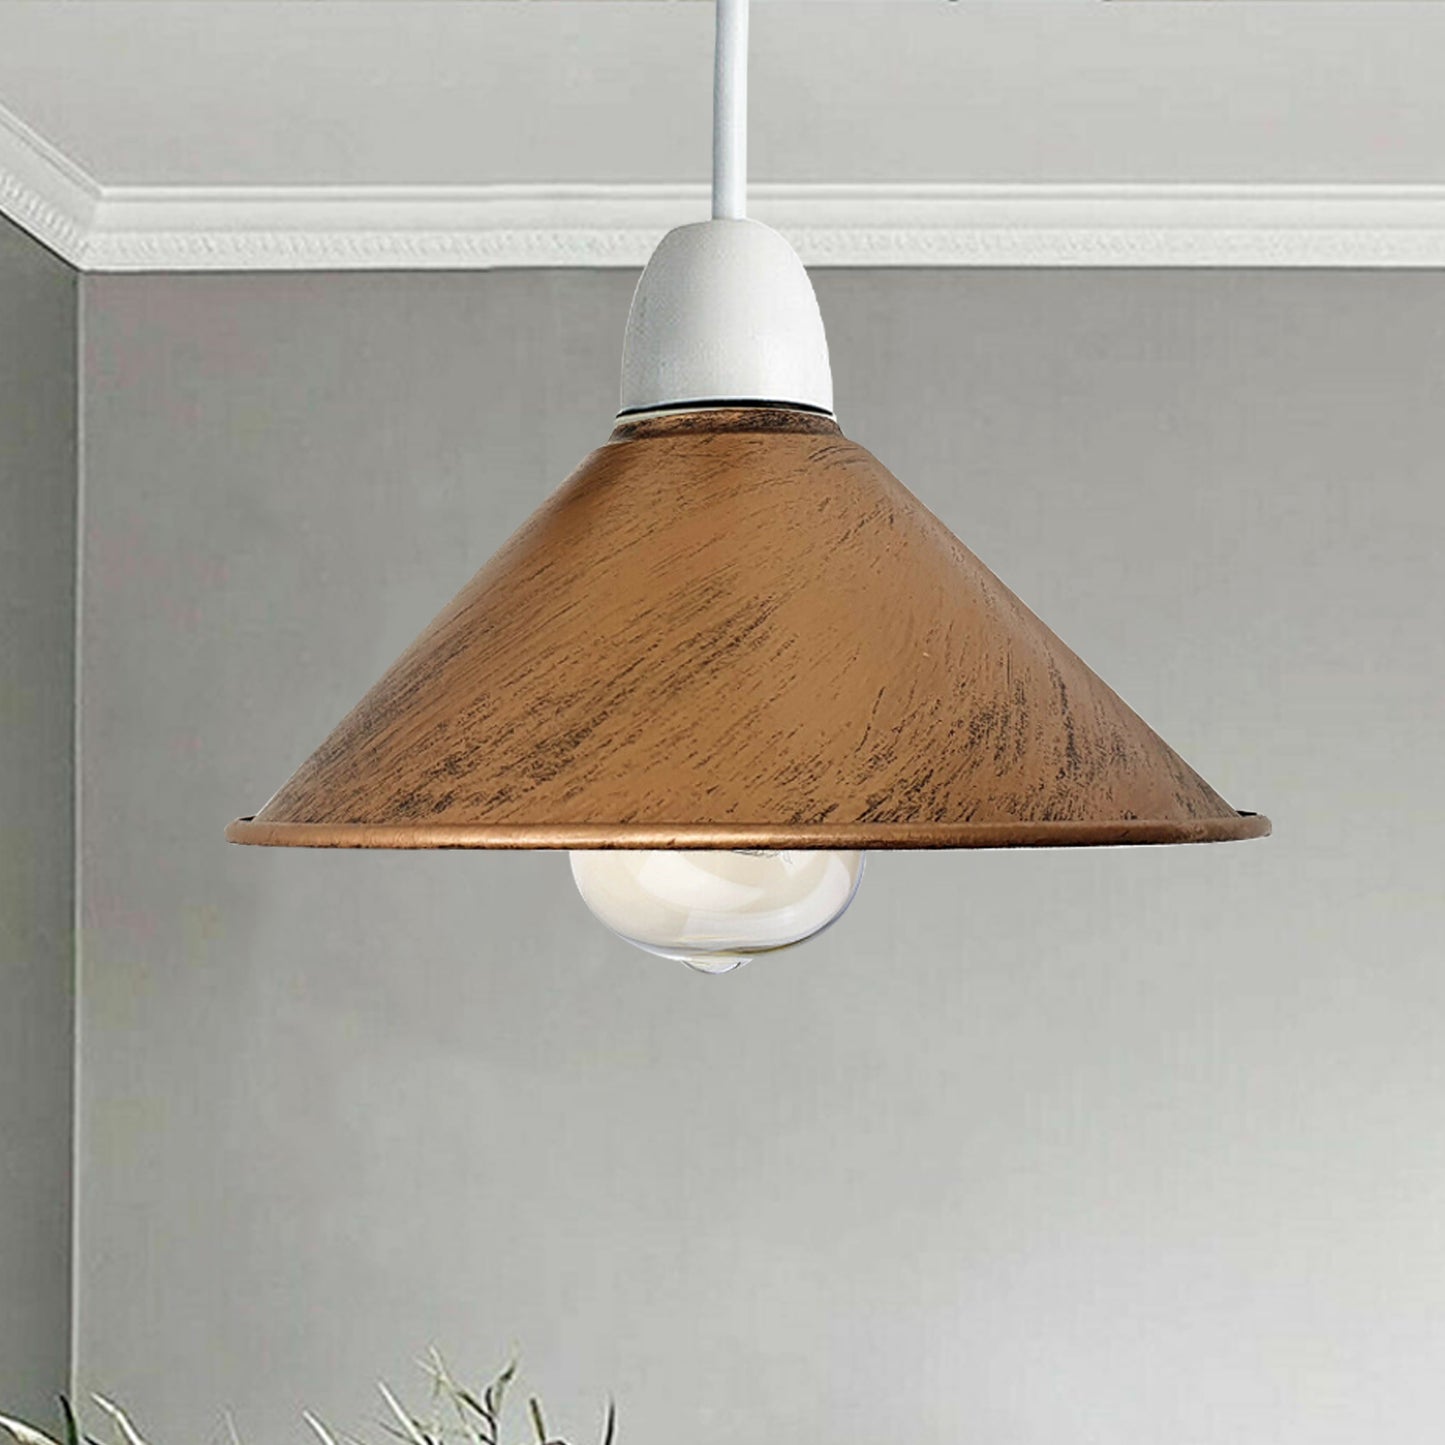 ceiling pendant lamp shade